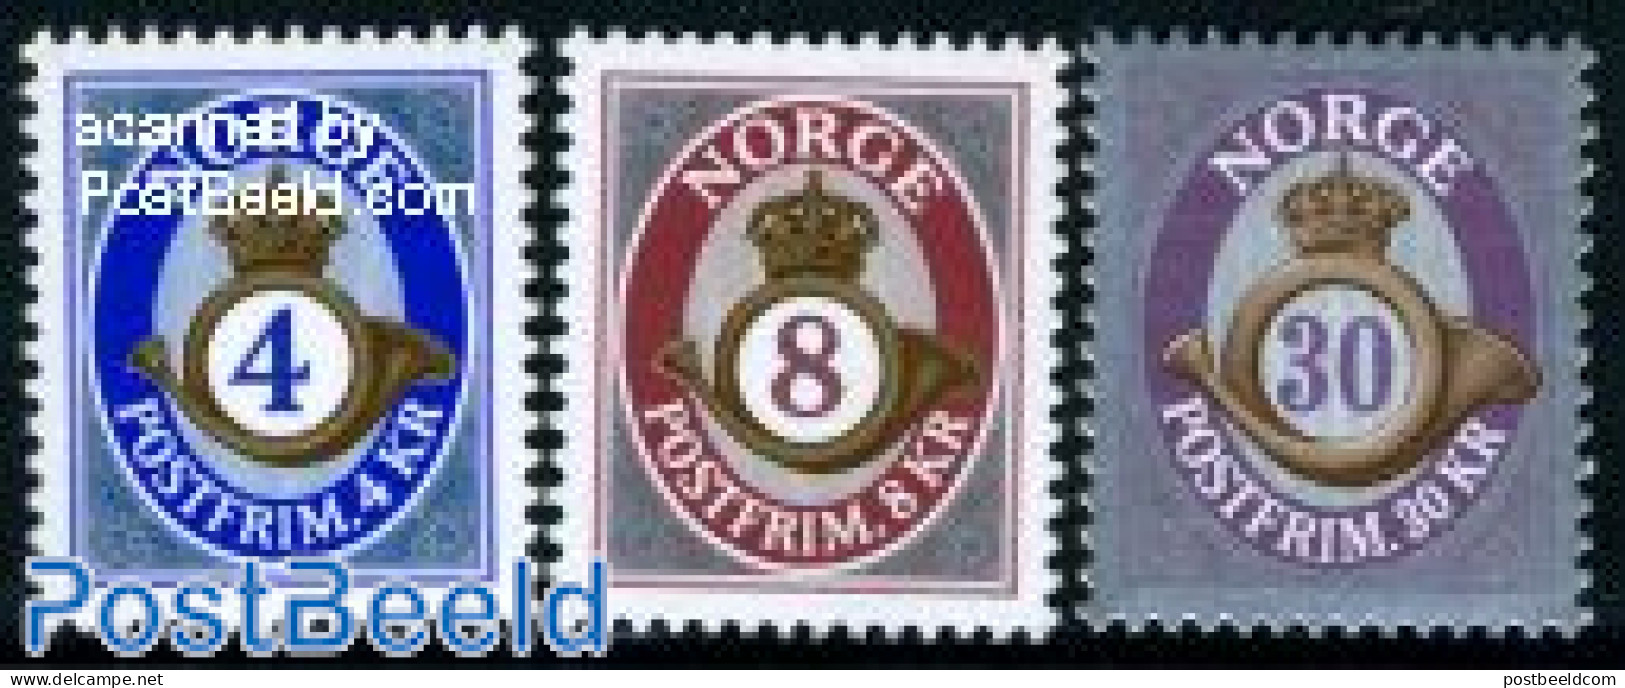 Norway 2010 Definitives 3v, Mint NH - Neufs